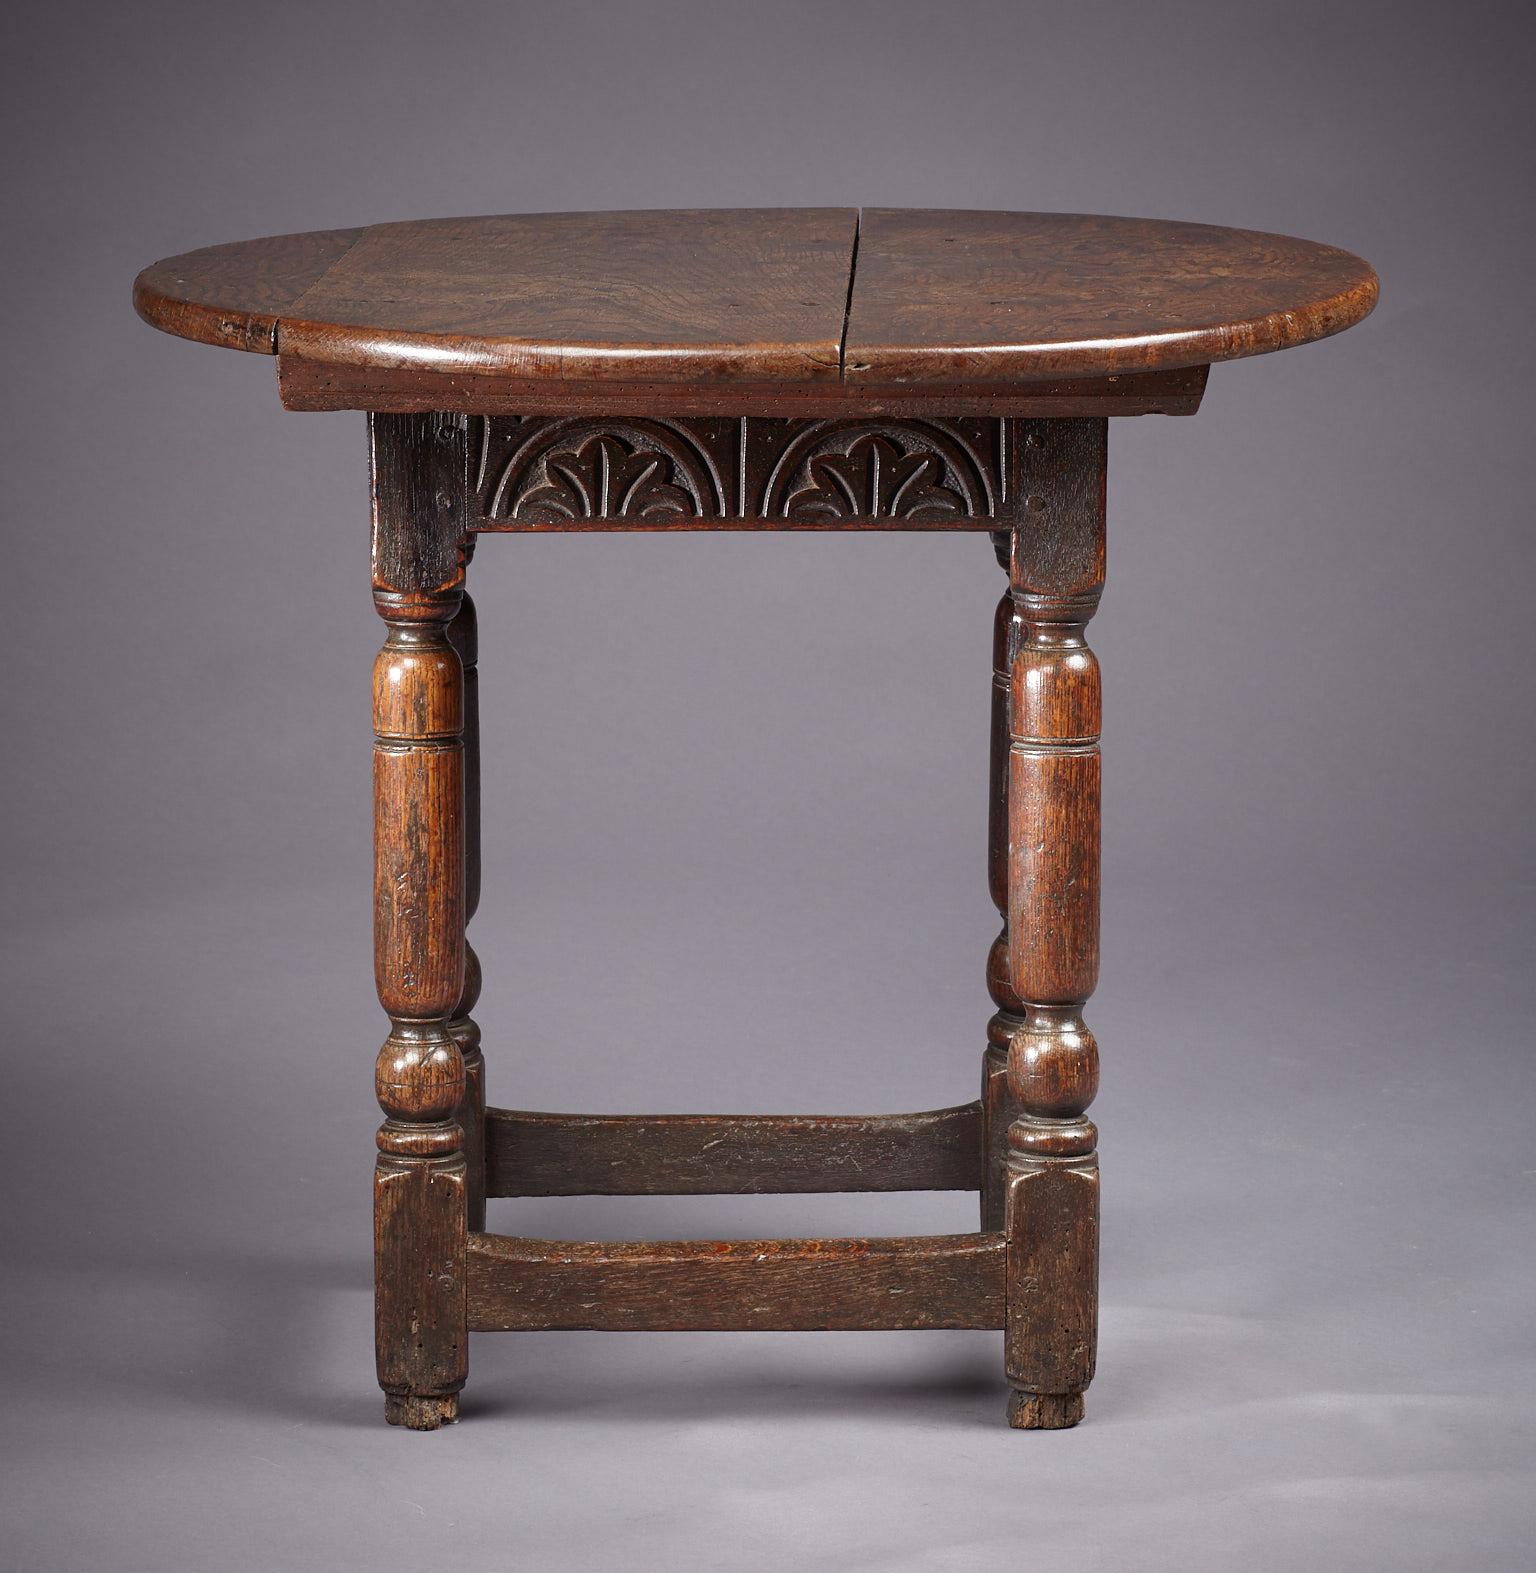 British Oak Table Stool, Mid-17th Century English, circa 1640-1650